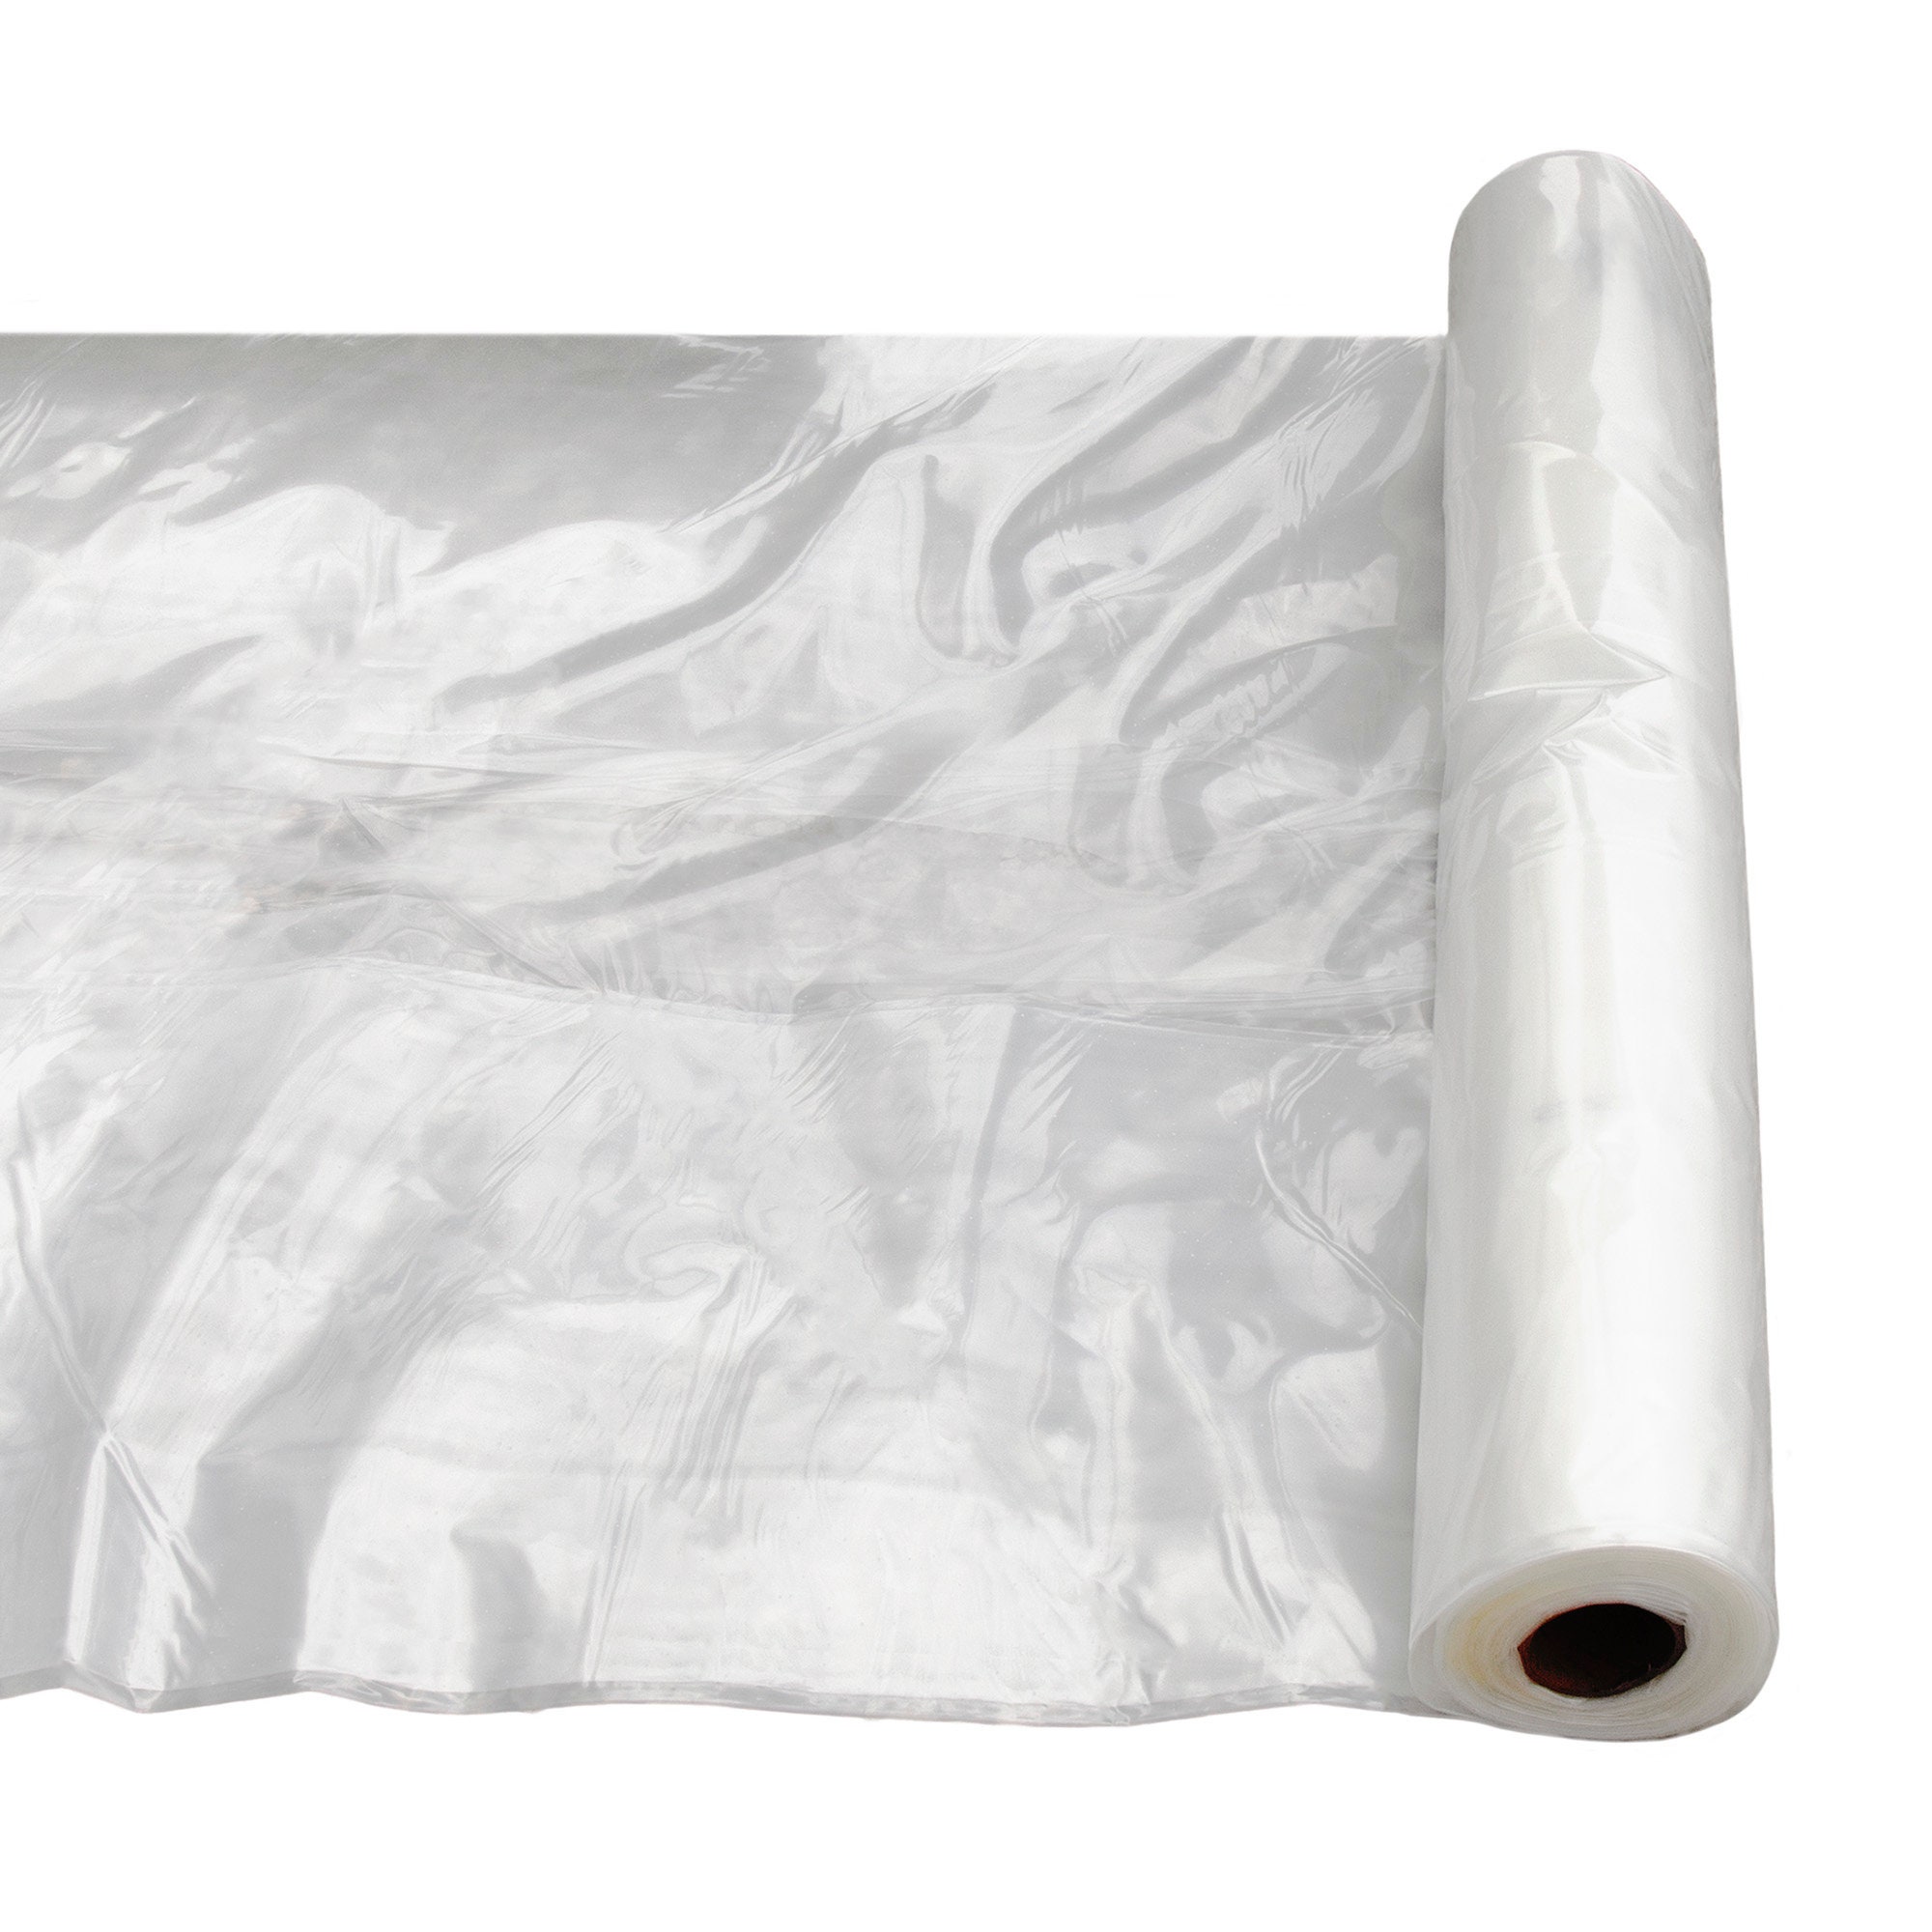 Zip Top Clear Plastic Bags 2x3, 3x4, 3x5 & 4x6 Inches qty 25 Zip